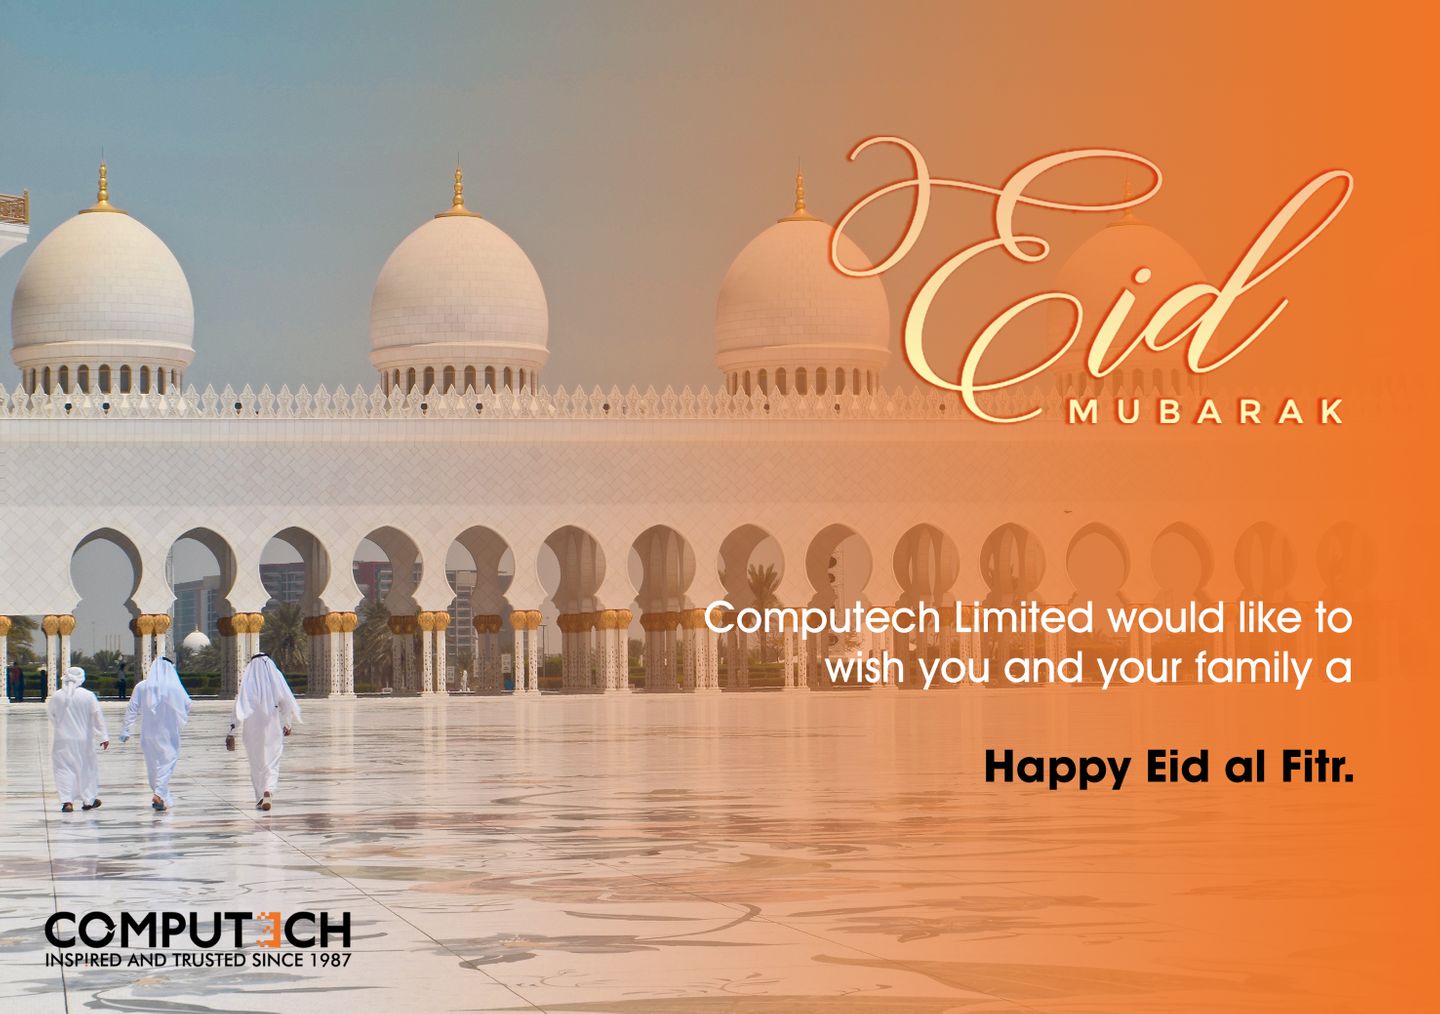 Computech Limited wishes you Eid Mubarak!